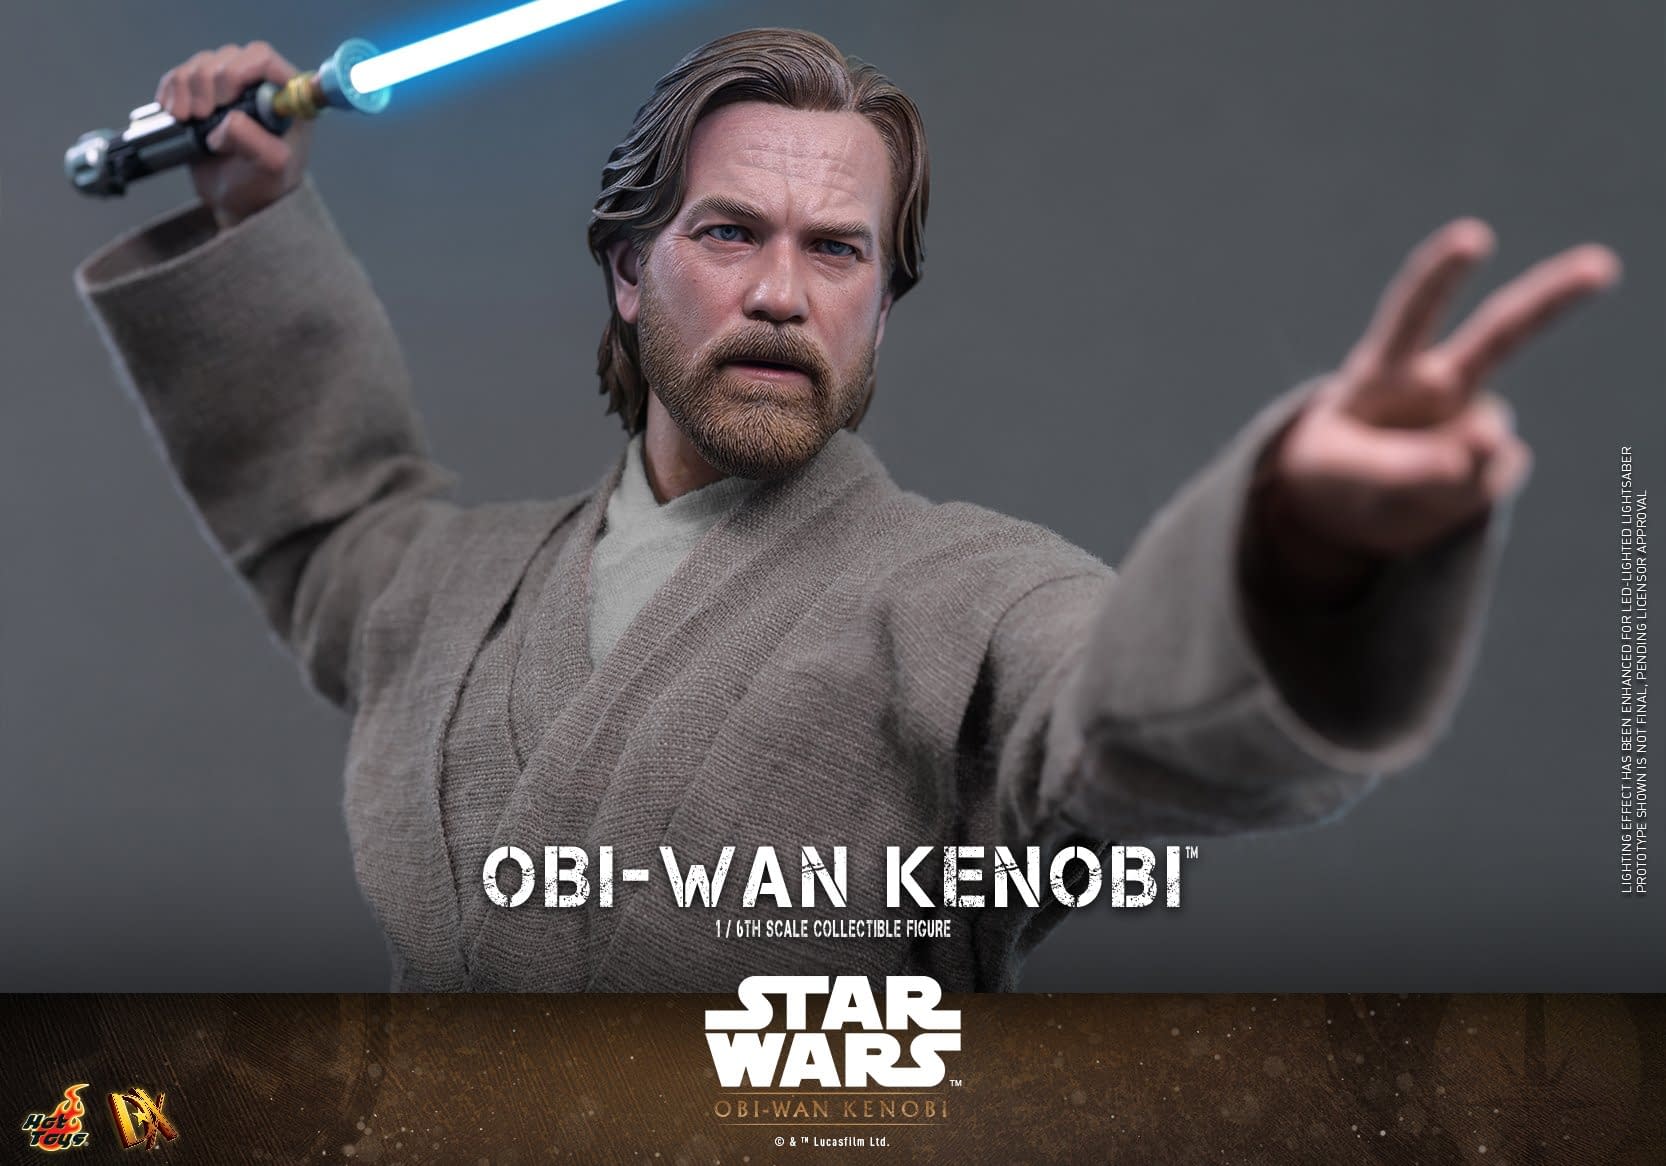 Obi-Wan Kenobi Embraces the Force 1/6 Scale New Hot Toys Figure 